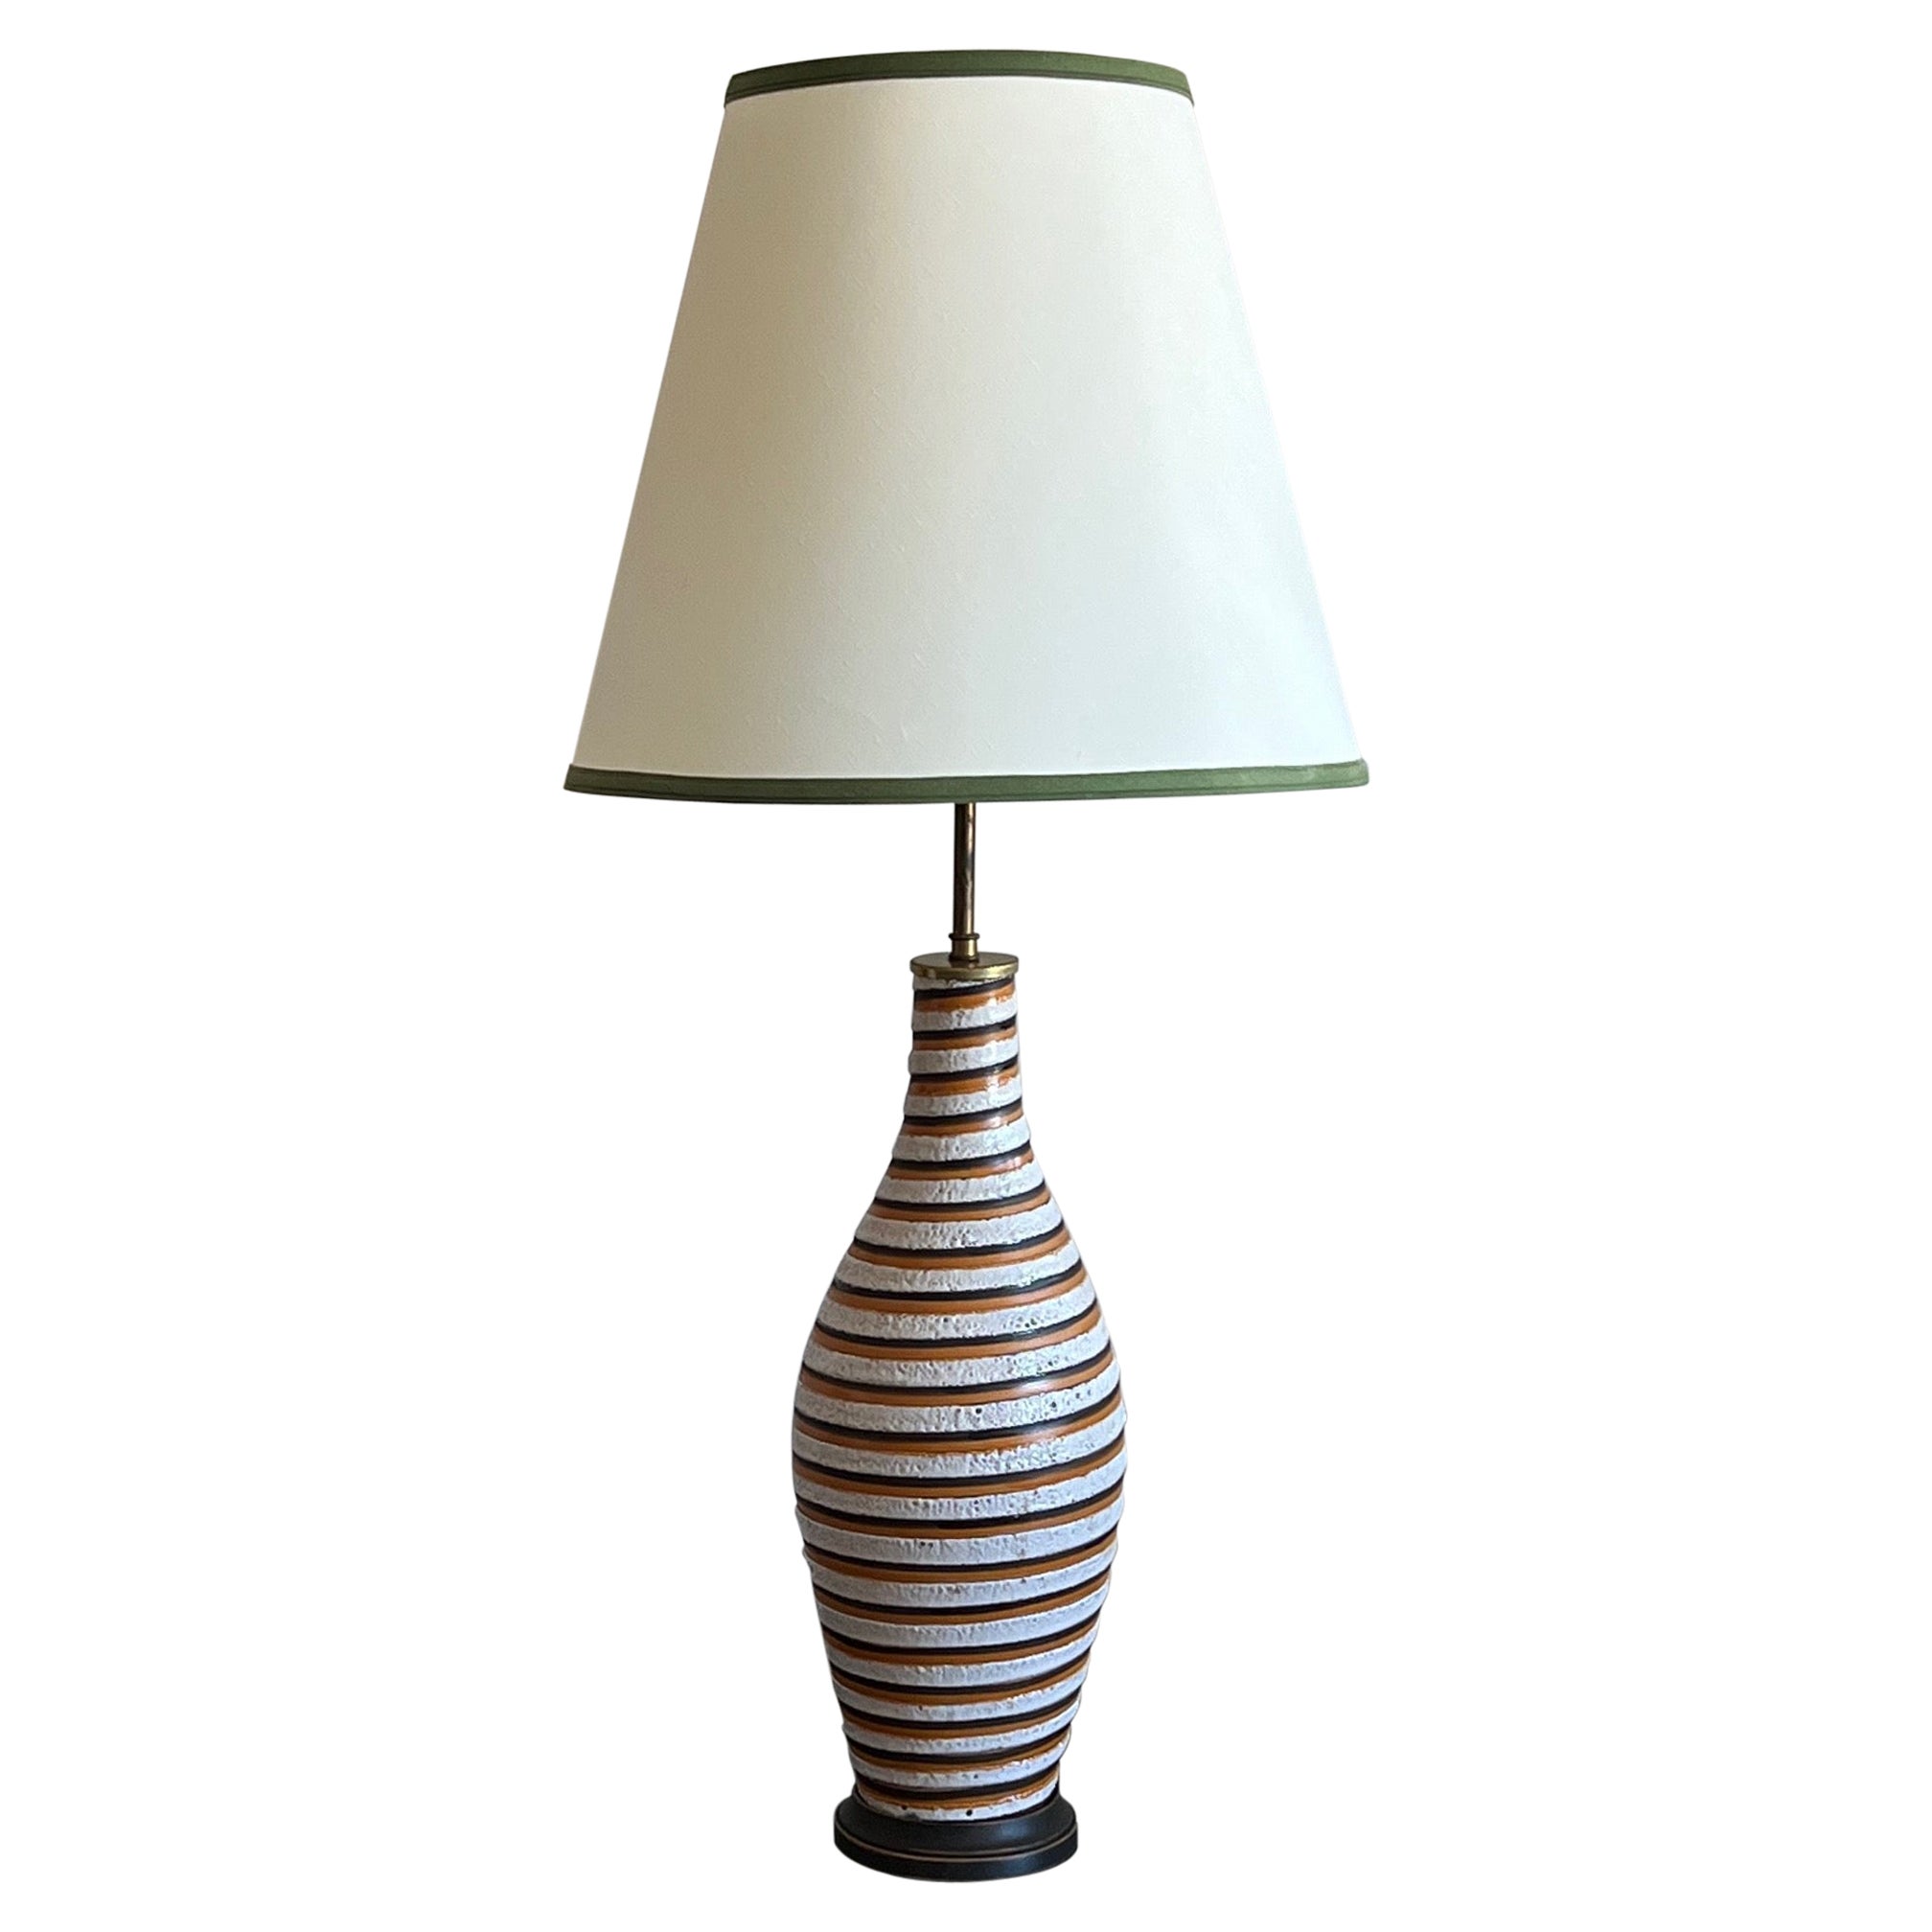 Unusual Ceramic Lamp by Bitossi